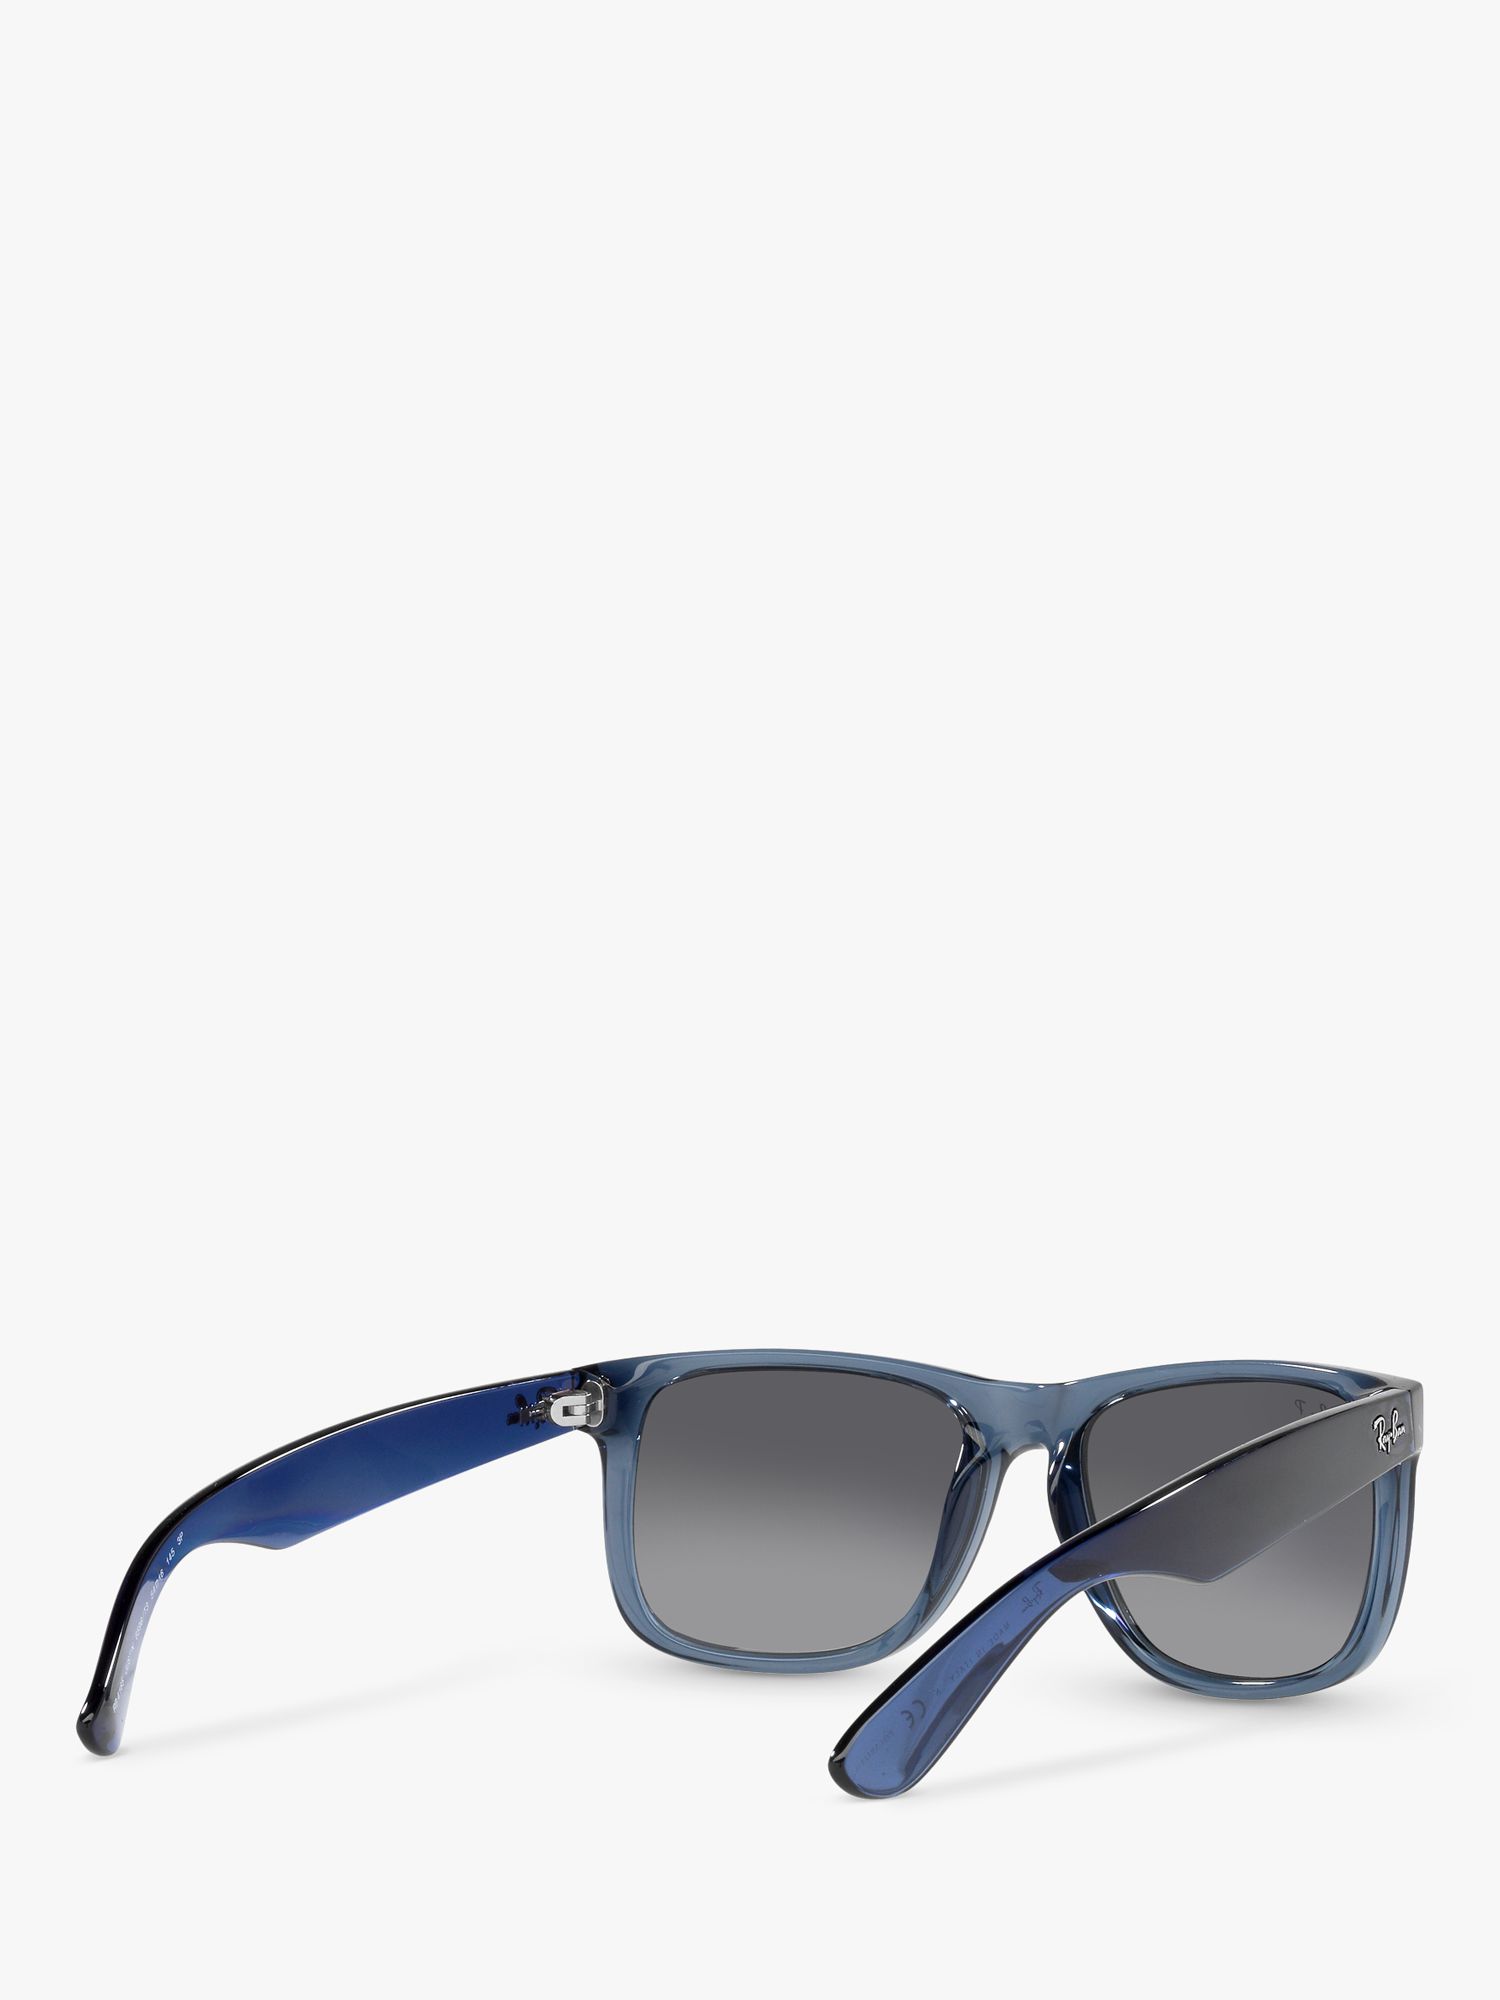 Buy Ray-Ban RB4165 Men's Polarised Justin Square Sunglasses, Transparent Blue/Grey Gradient Online at johnlewis.com